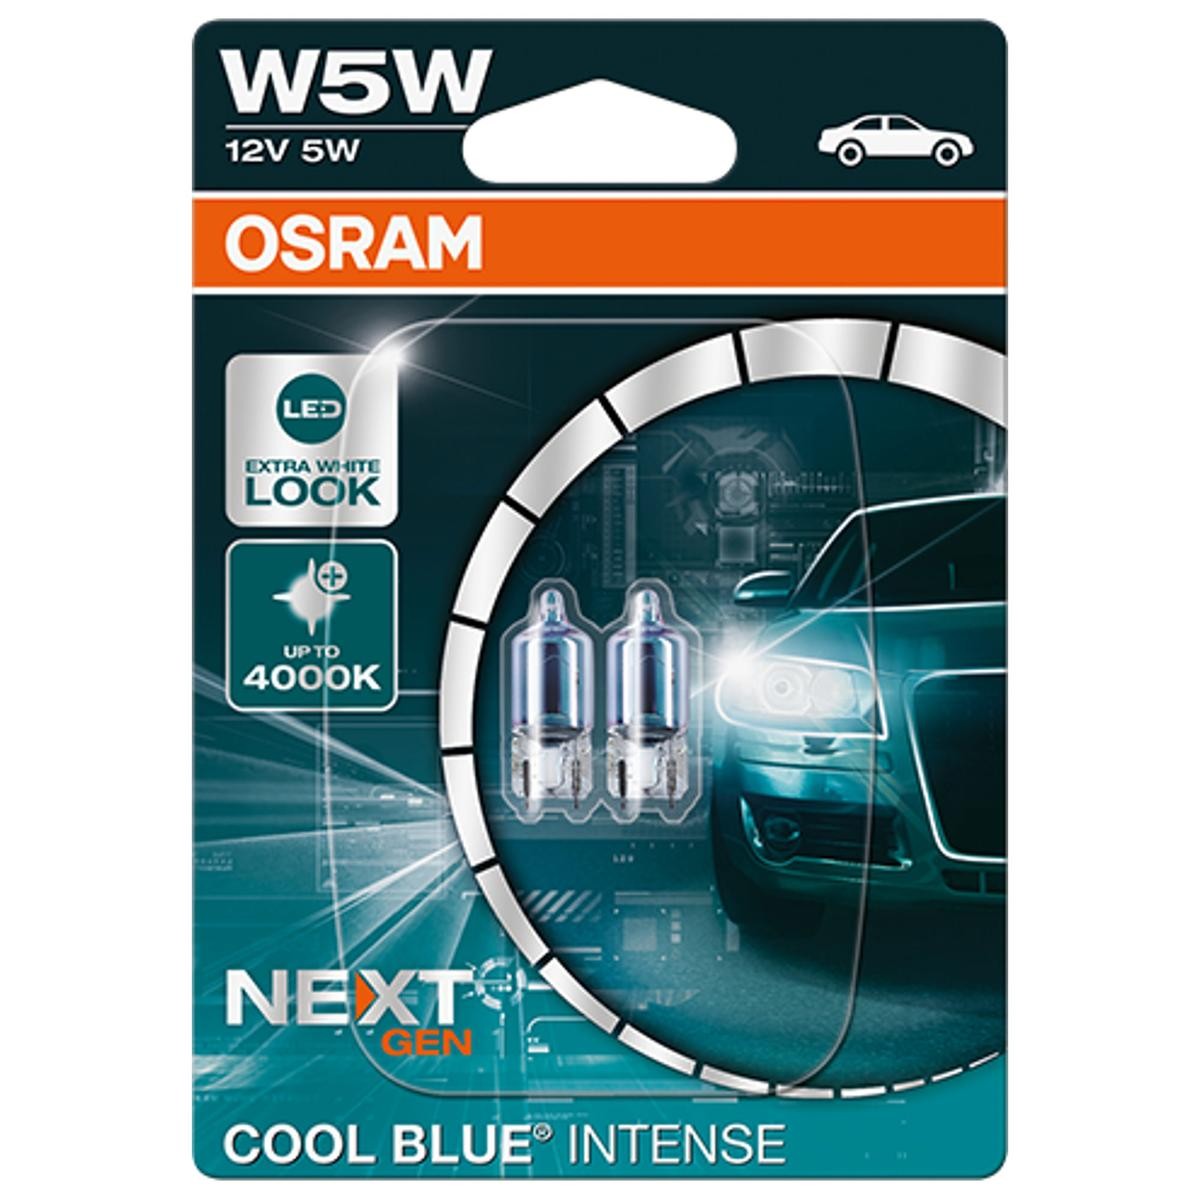 APRILIA RS4 Blinkerbirne 12V 5W, W5W OSRAM COOL BLUE INTENSE next Generation 2825CBN-02B